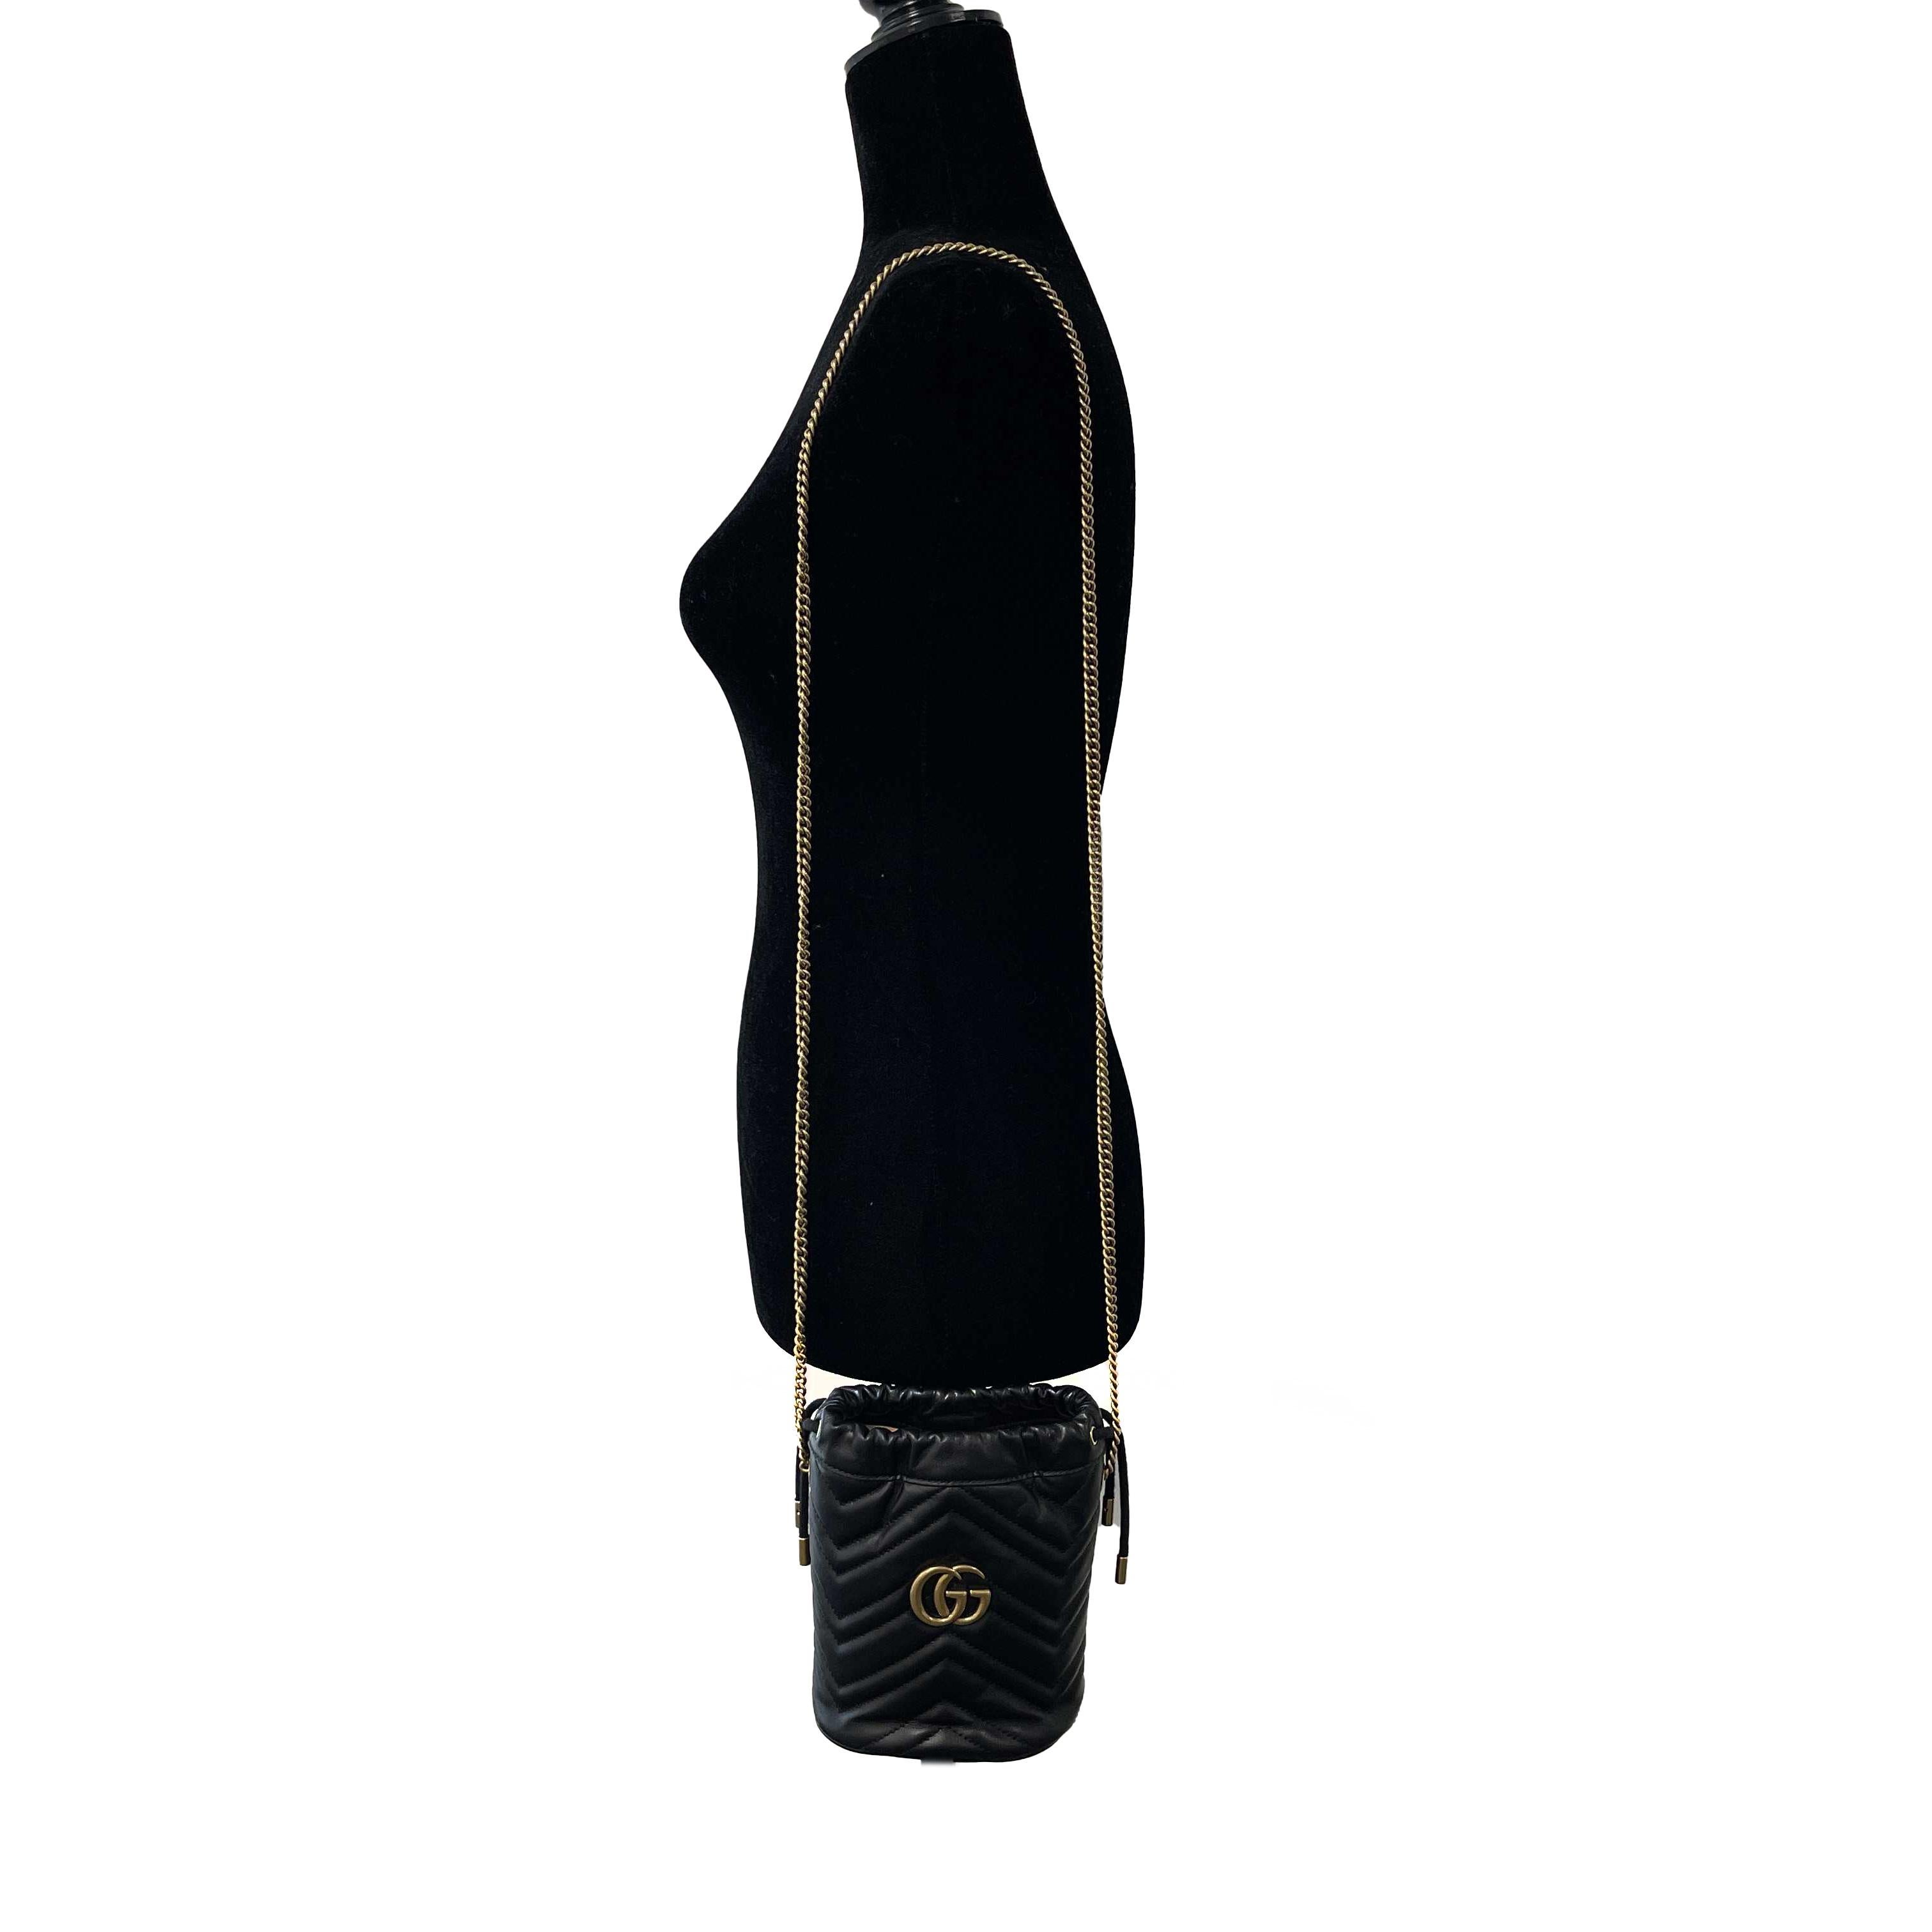 Gucci - Very Good - GG Marmont Bucket Bag Mini - Black - Handbag 5